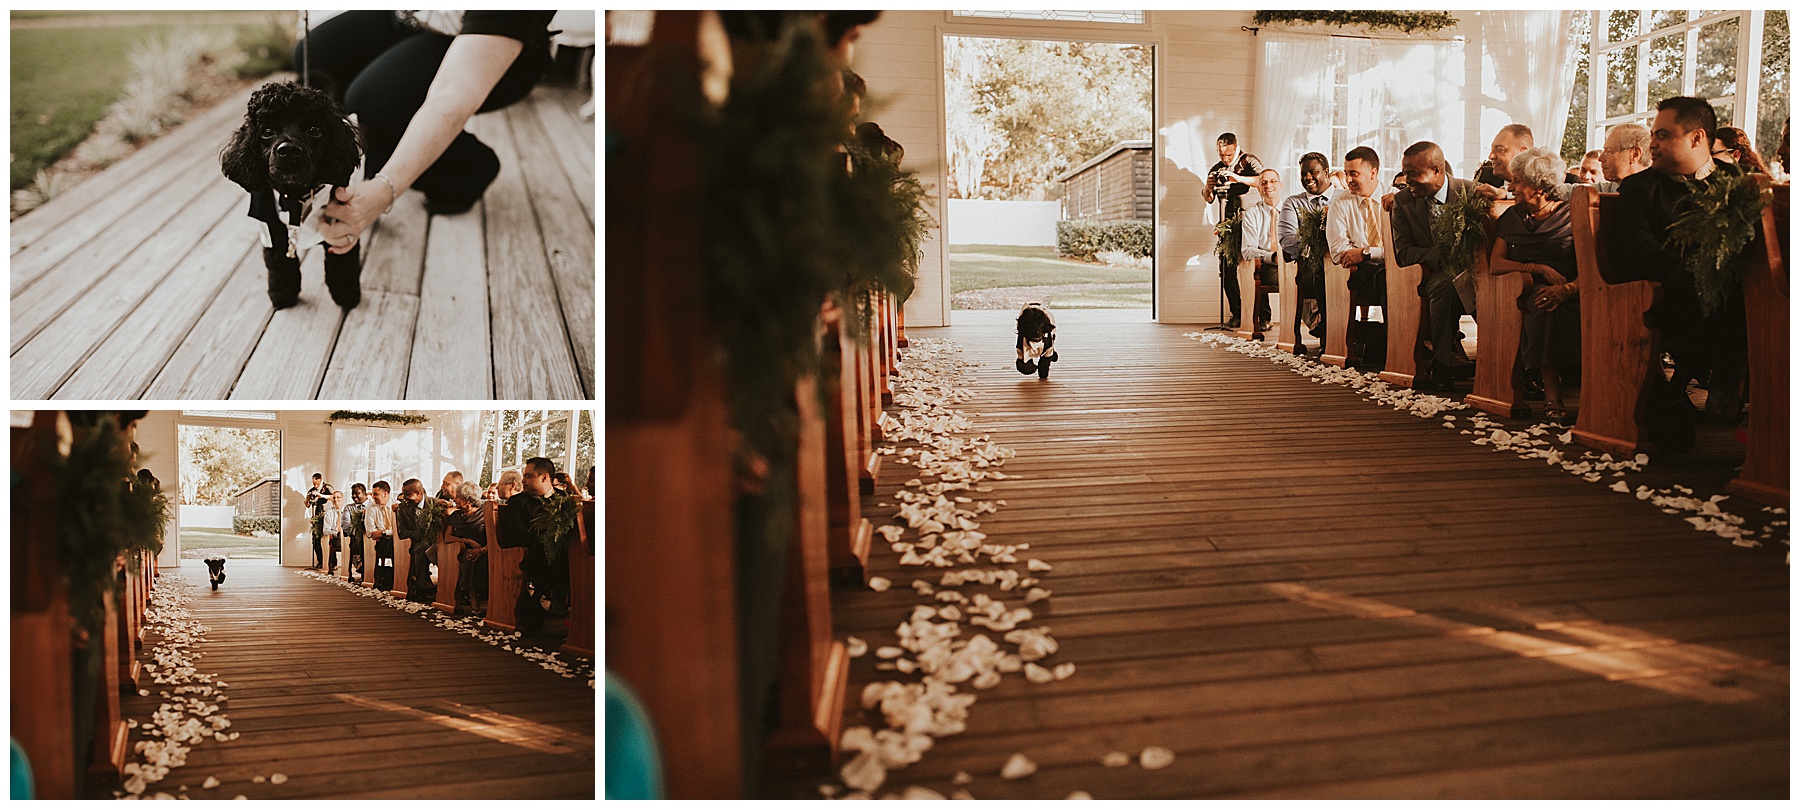 Dog ring bearer - Photographed by Juju Photography - Destination wedding photographer